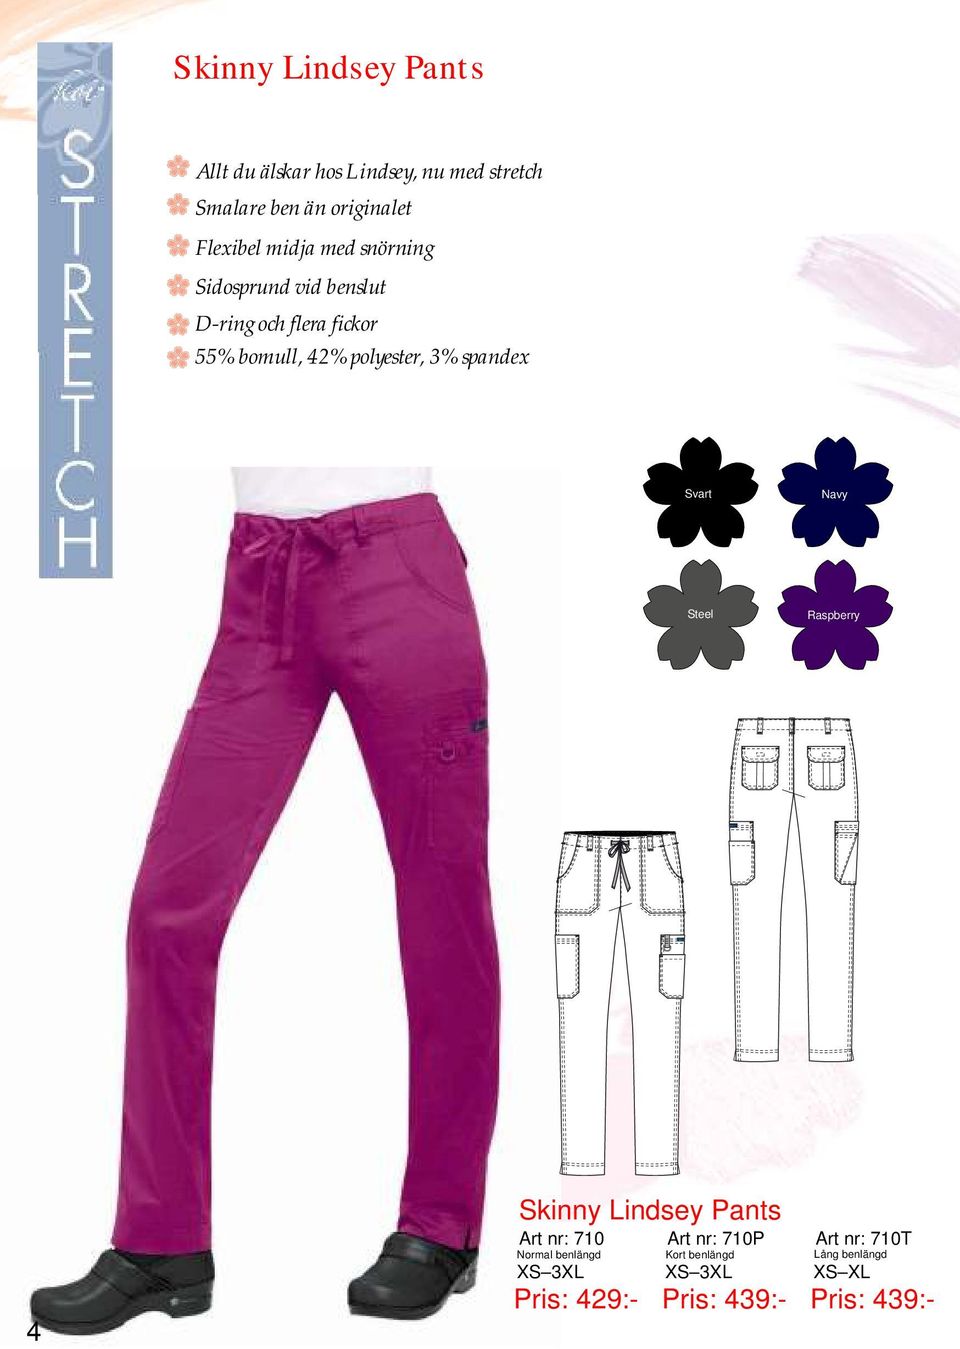 polyester, 3% spandex Steel Raspberry Skinny Lindsey Pants Art nr: 710 Art nr: 710P Art nr: